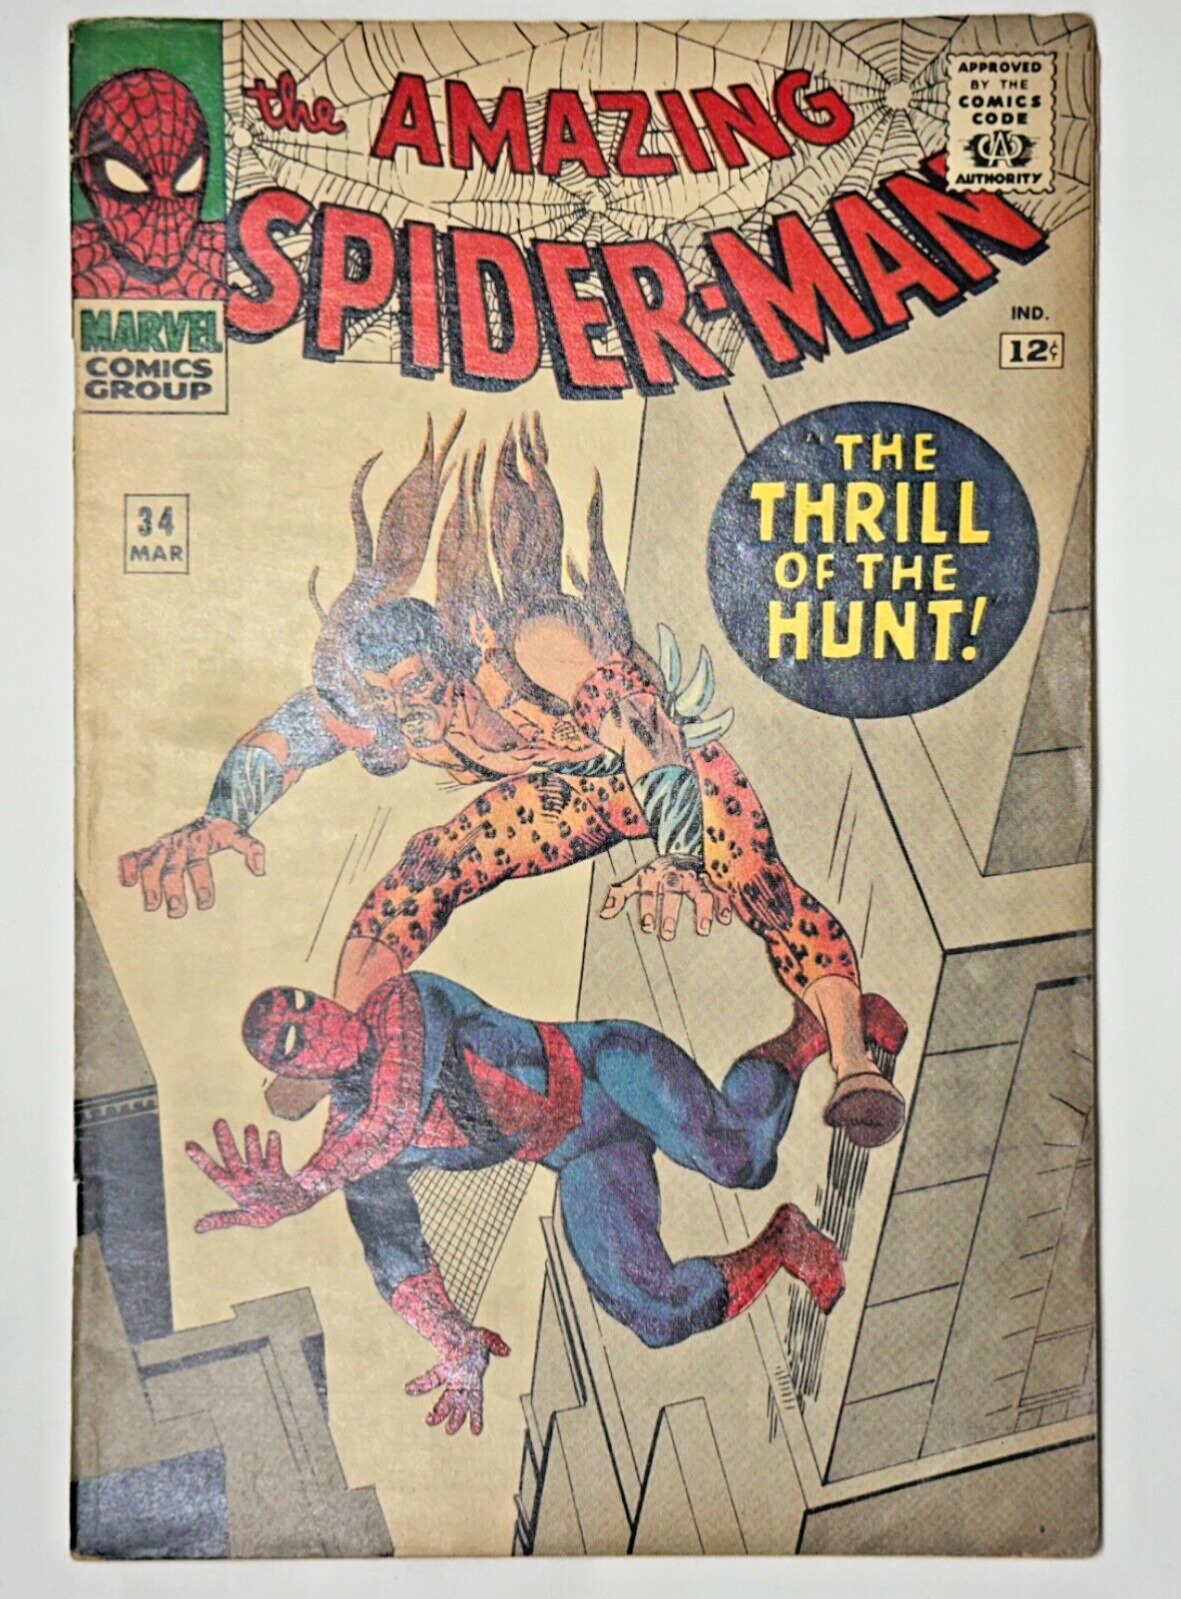 AMAZING SPIDER-MAN #34 VG+ Kraven the Hunter App, 2nd App Gwen Stacy 1966 Marvel